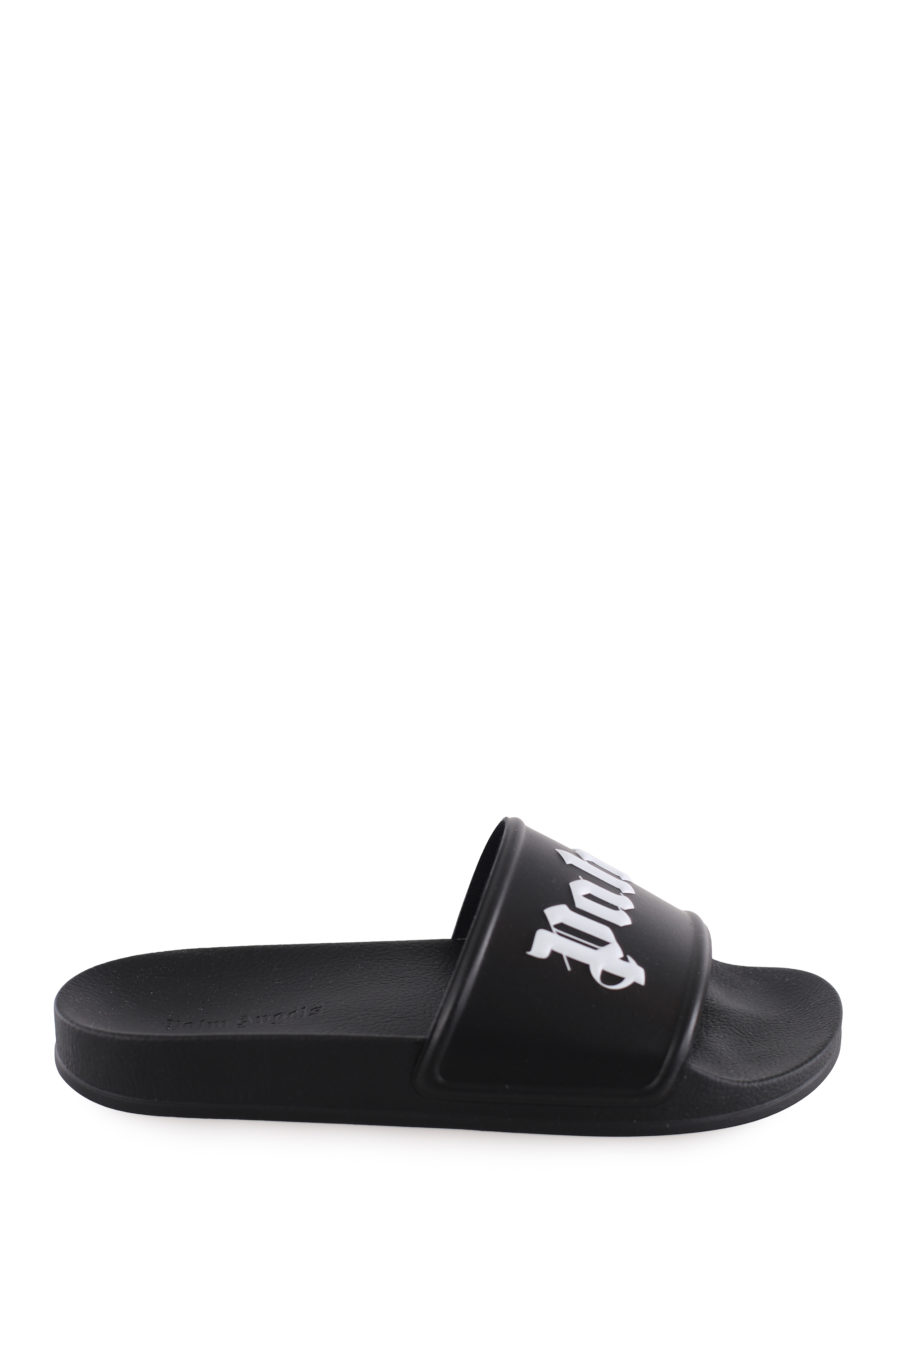 Sliders negras con logo blanco - IMG 7364